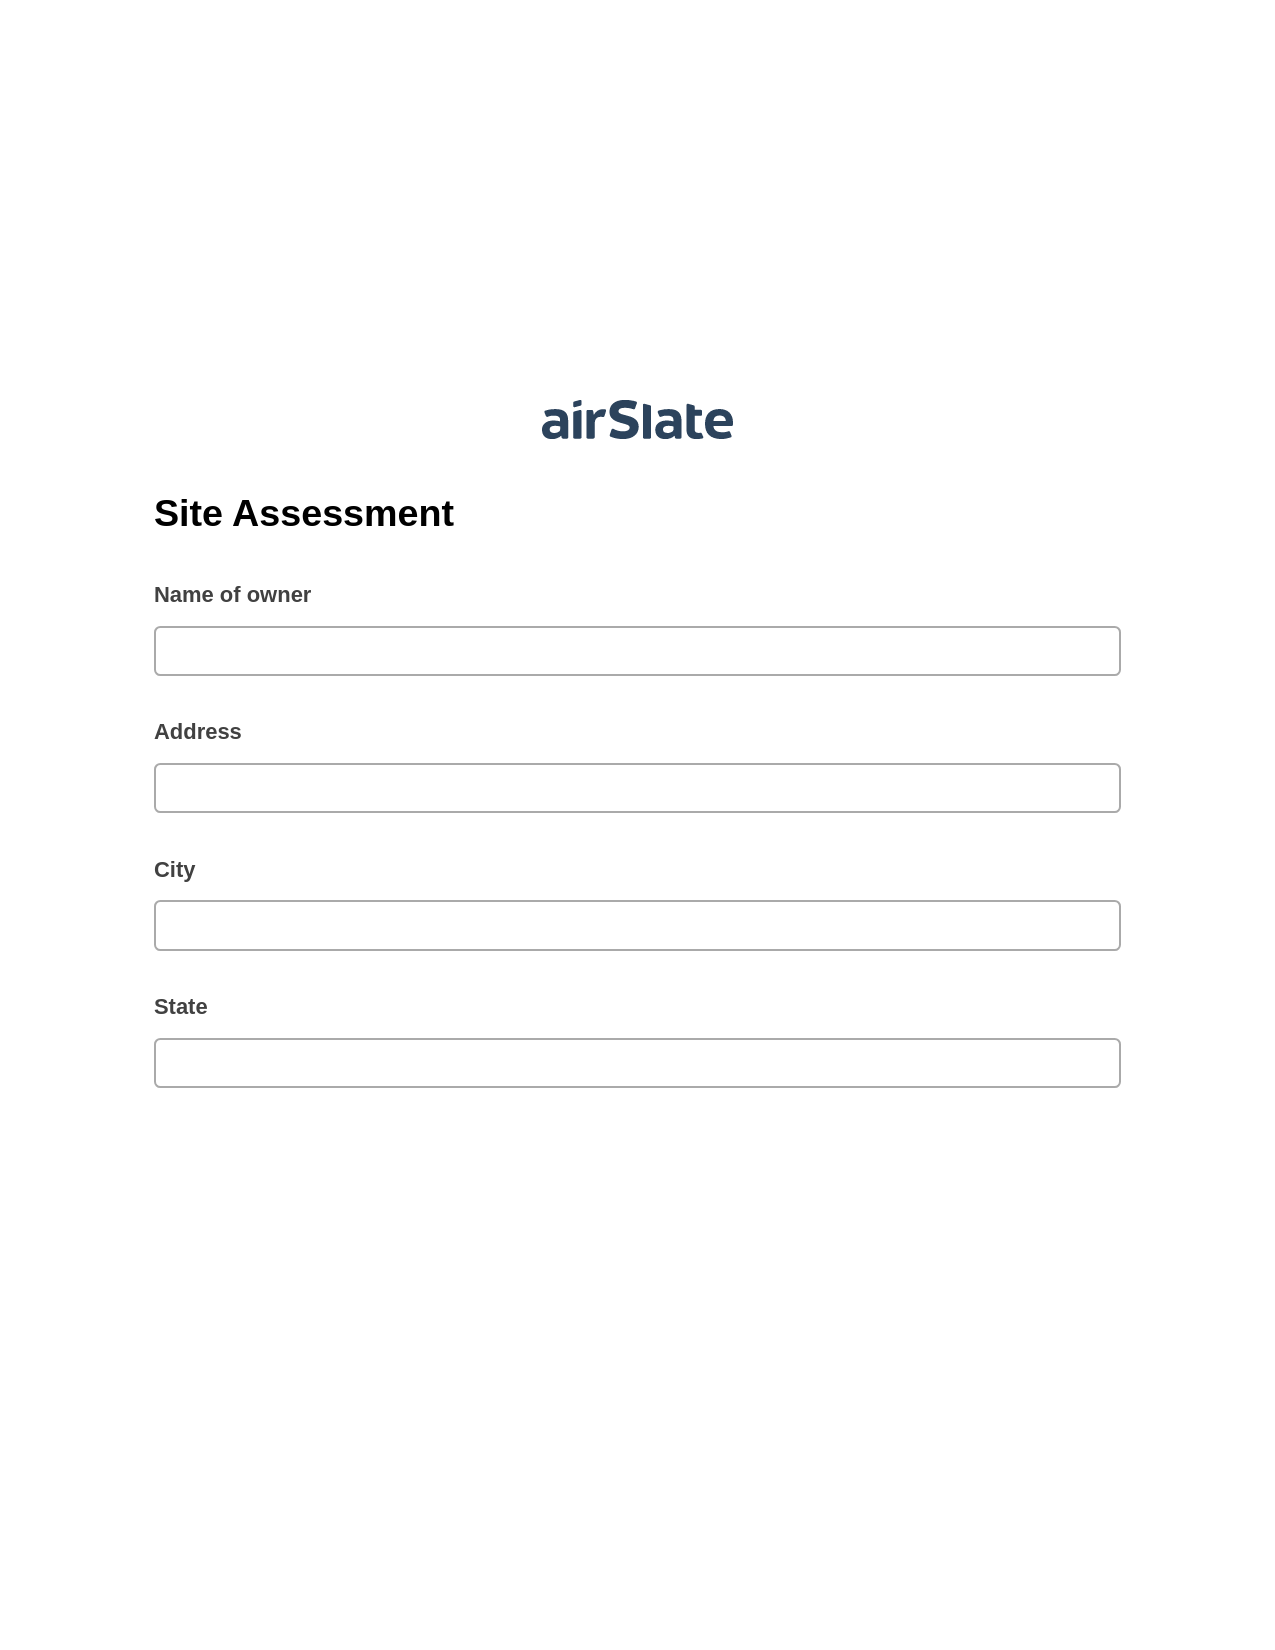 Site Assessment Pre-fill from Smartsheet Bot, Document Hide Bot, Export to MySQL Bot